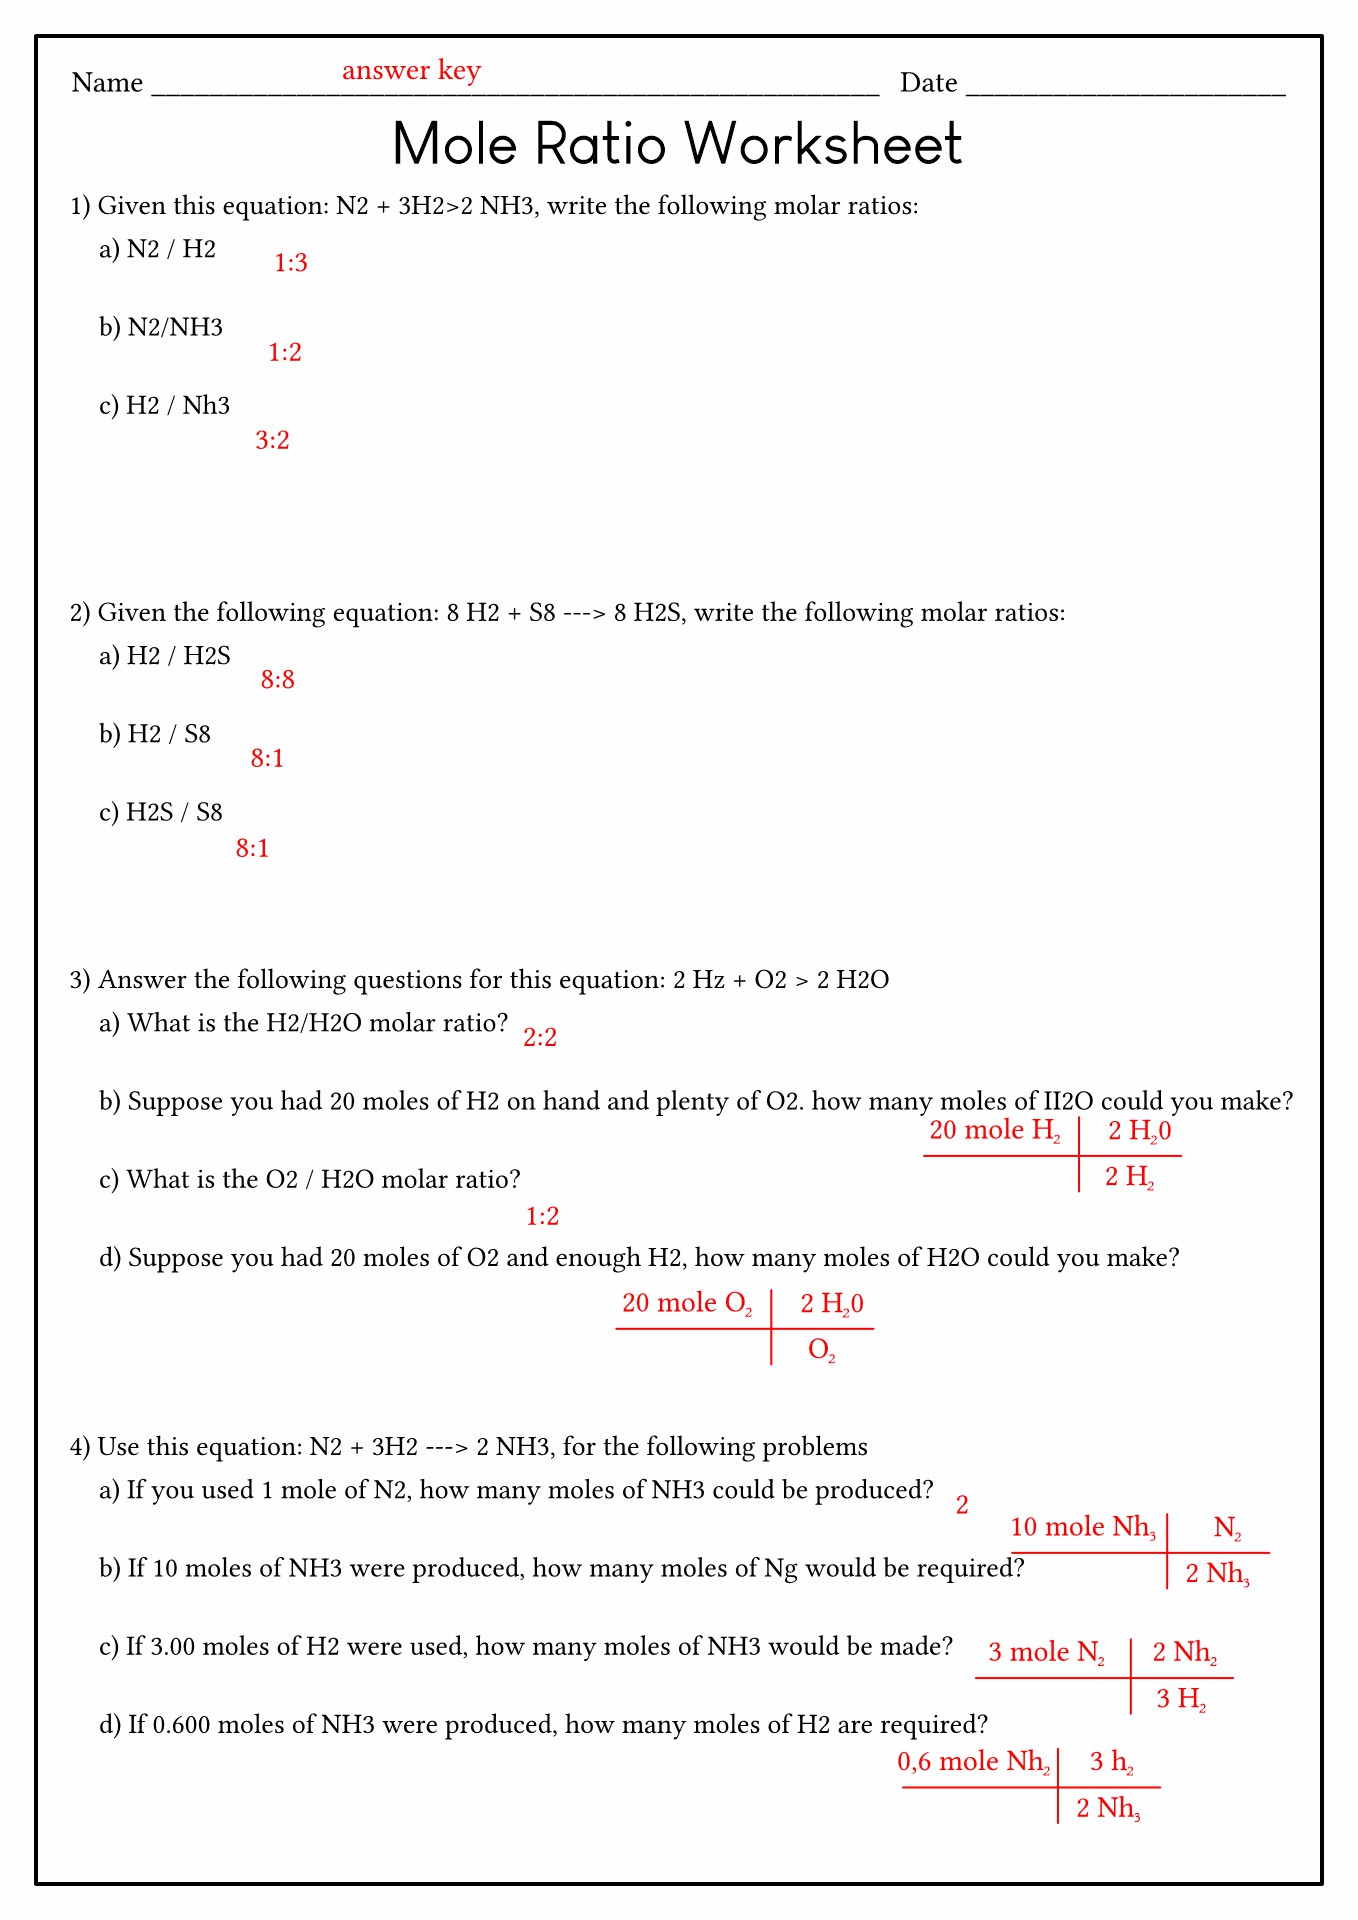 Mole Ratio Worksheet Answers